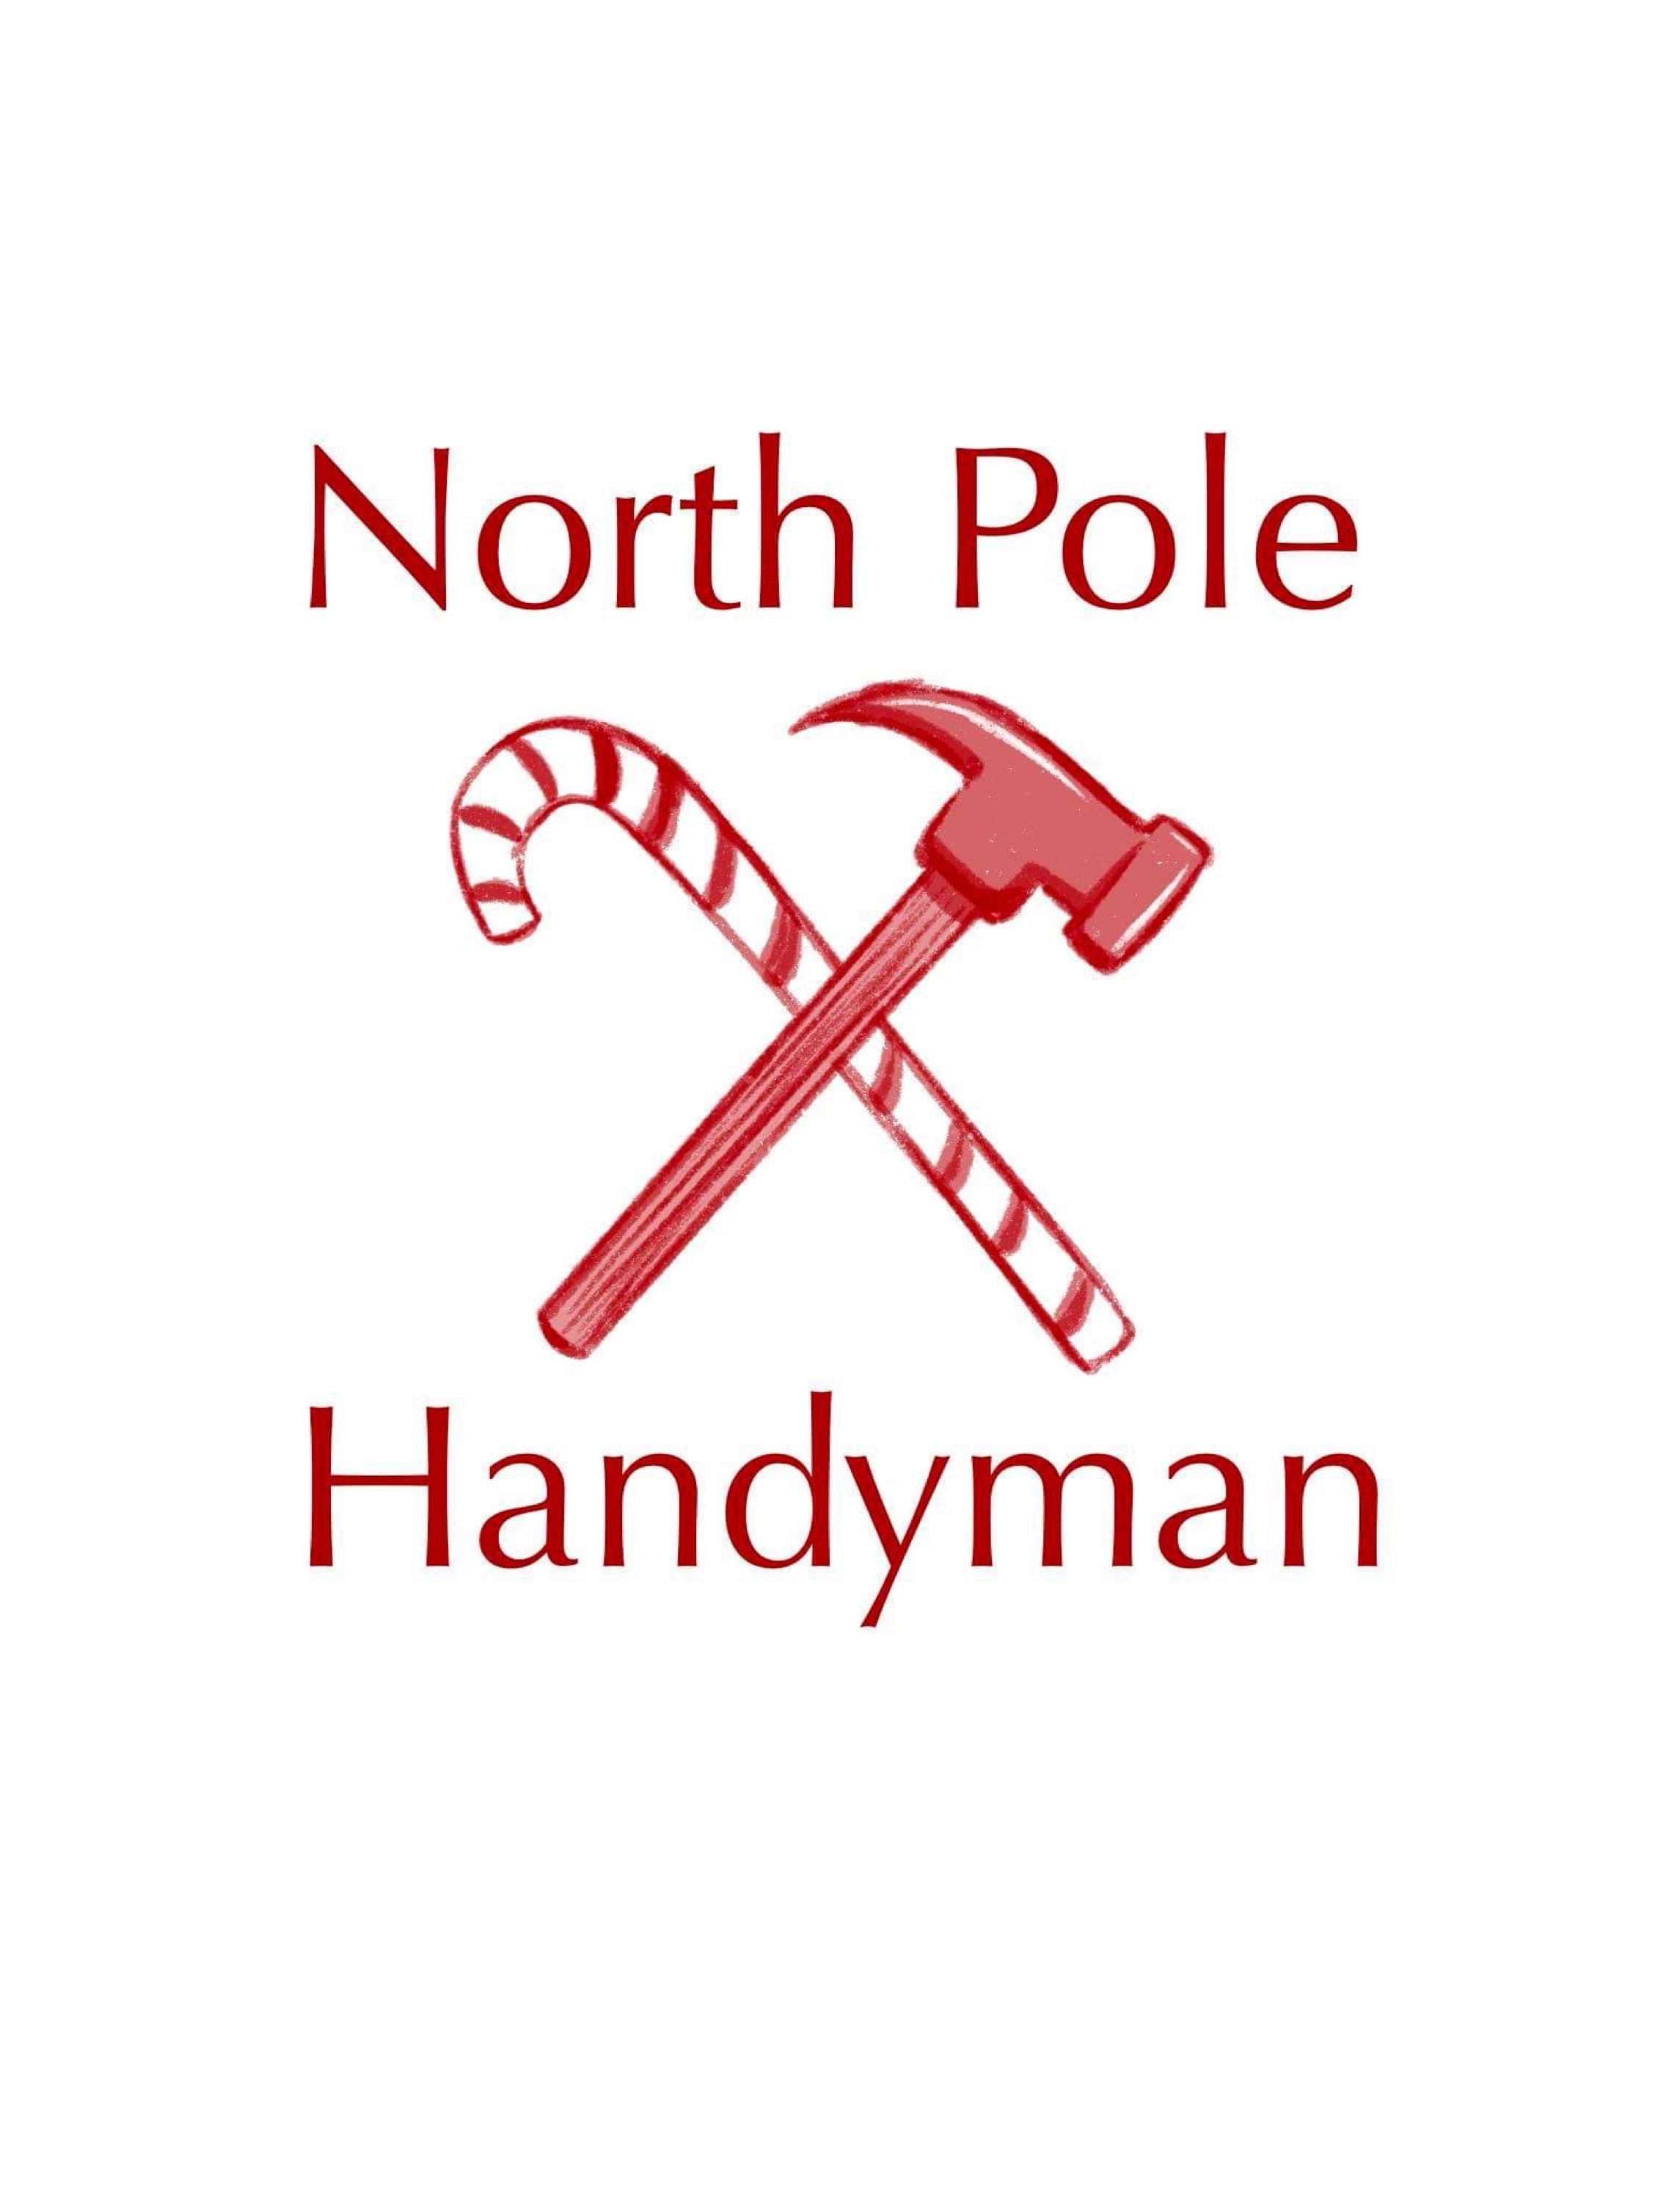 The North Pole Handyman Logo